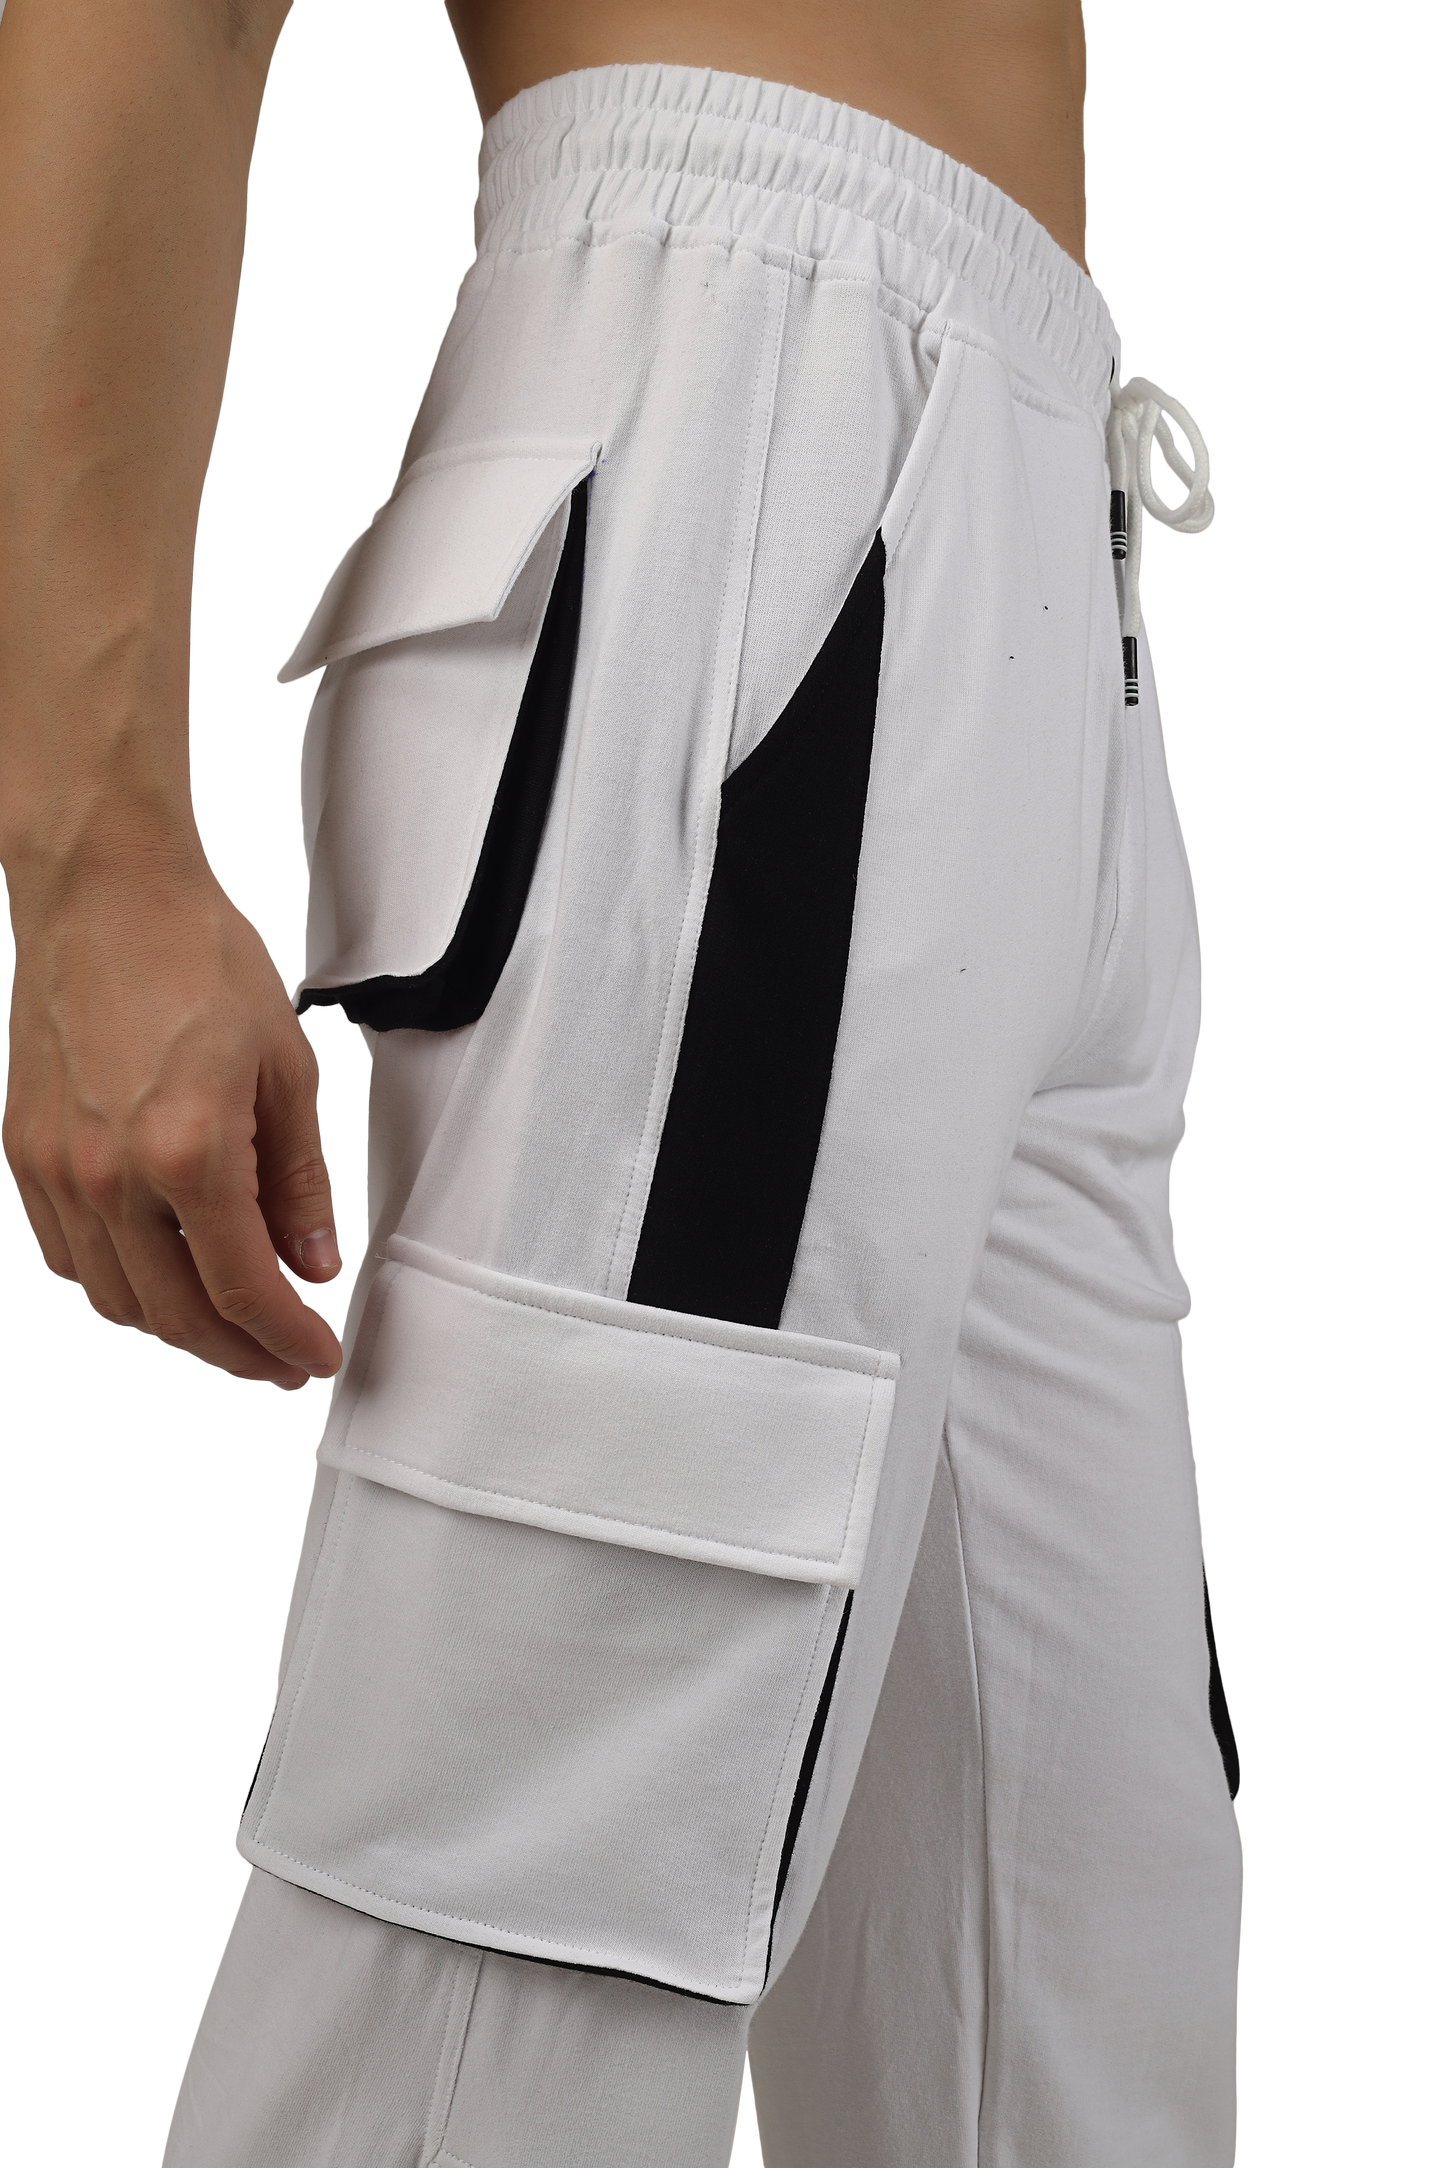 6 Pocket Cargo Pant White & Black Highlighter - Wearduds